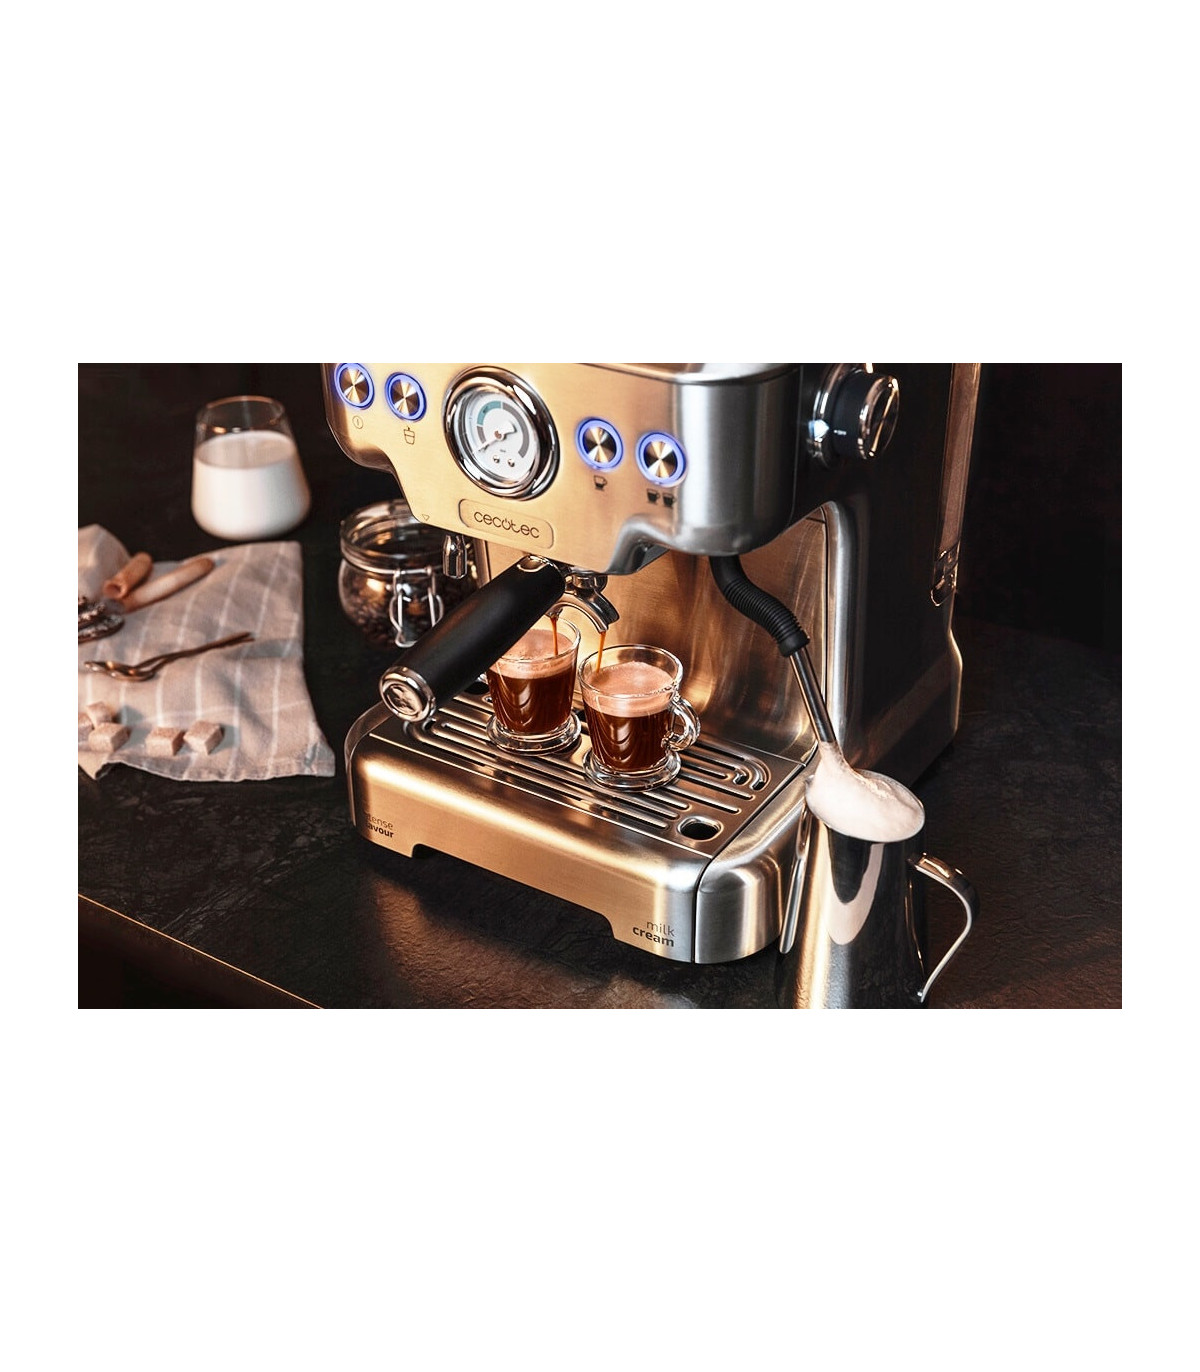 Cafetera CECOTEC Power Espresso 20